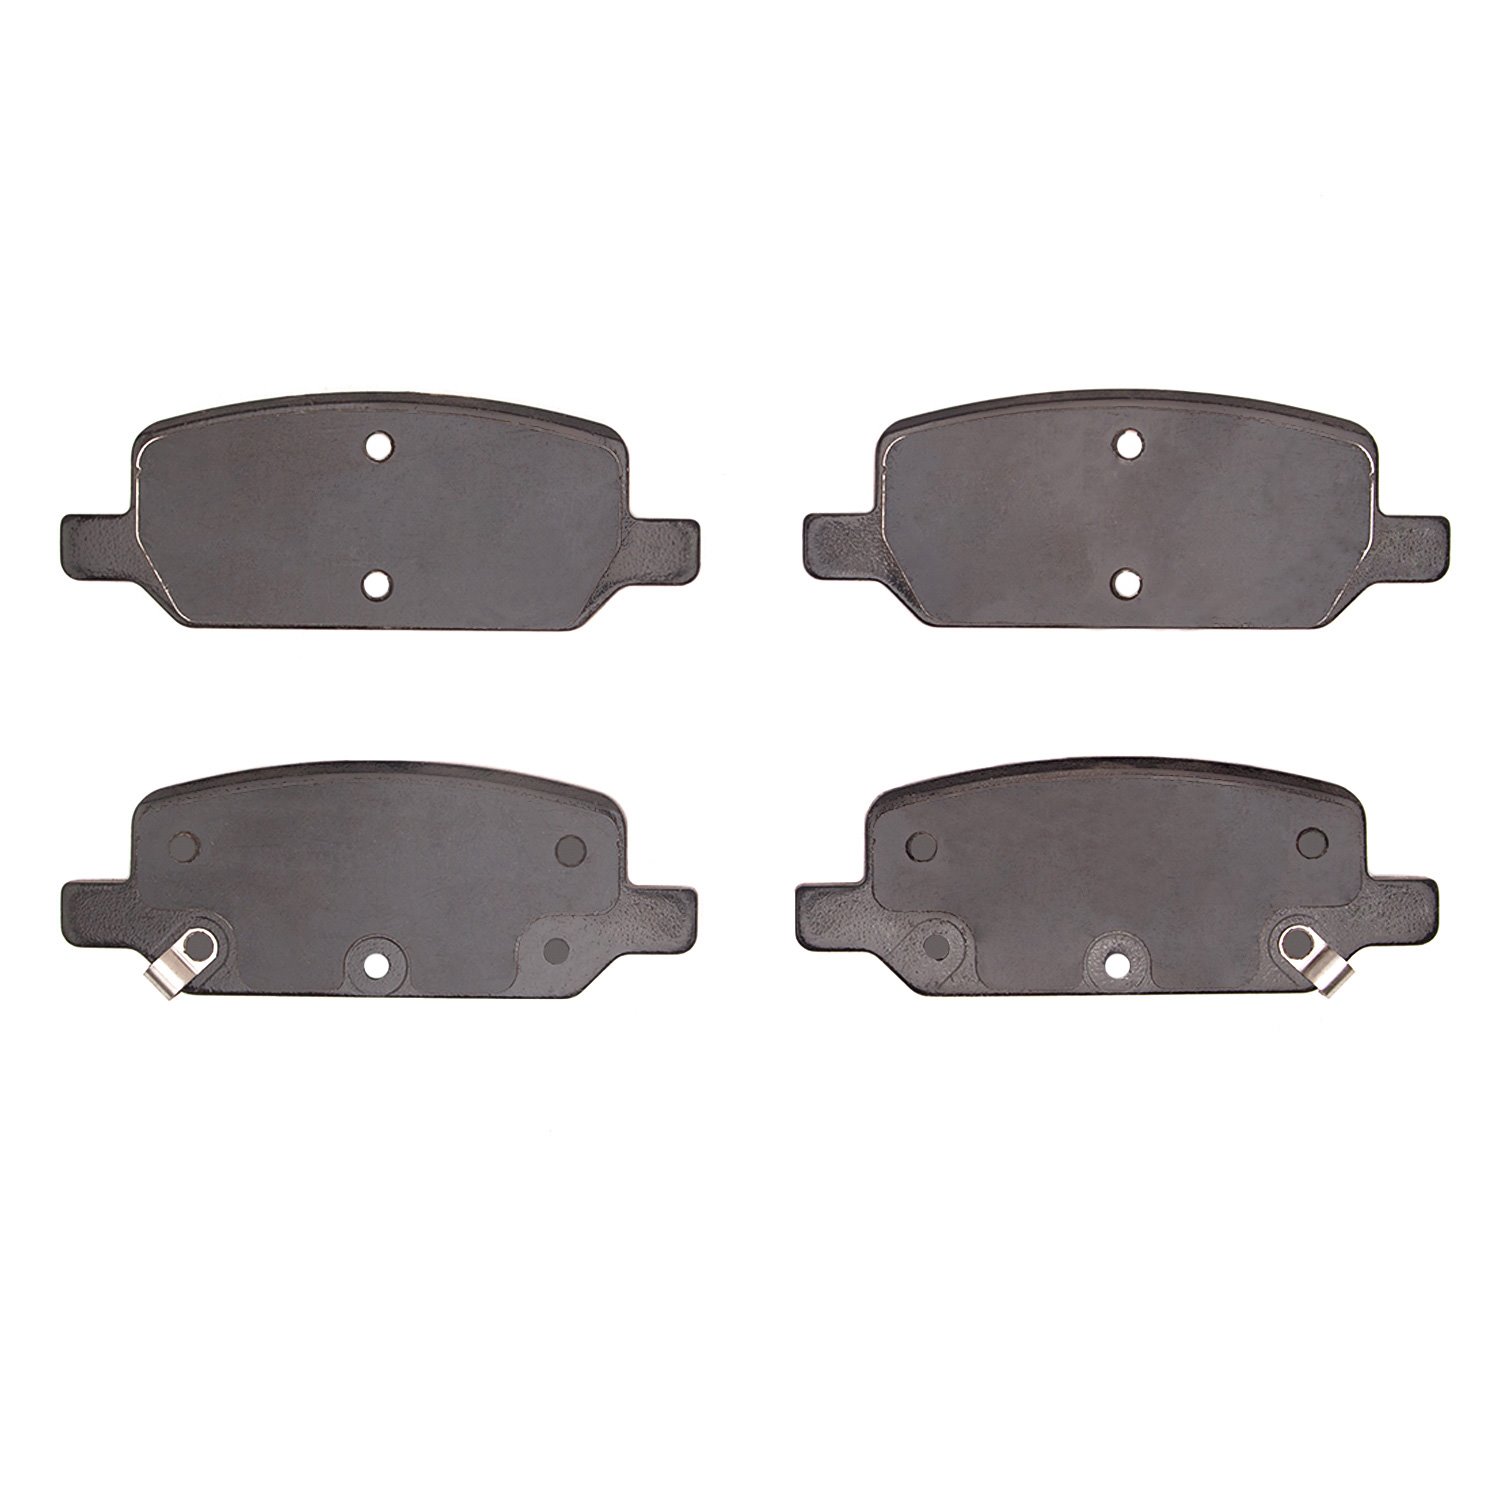 1551-2283-00 5000 Advanced Ceramic Brake Pads, Fits Select Tesla, Position: Rear